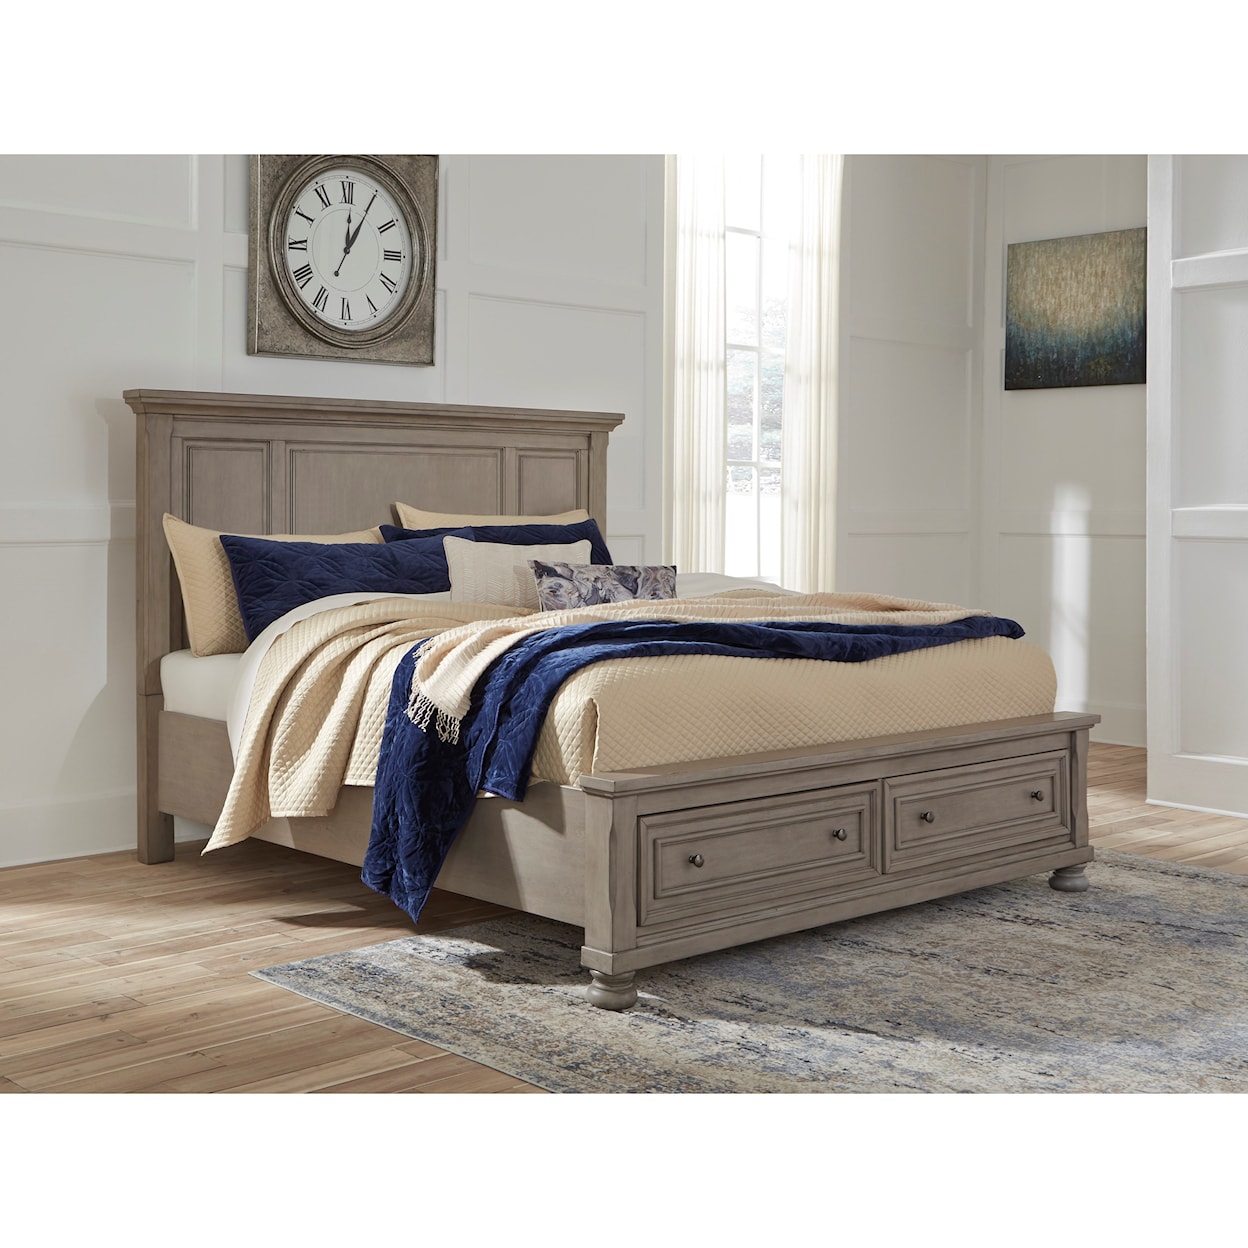 Ashley Furniture Signature Design Lettner King Panel Bed with Storage Footboard